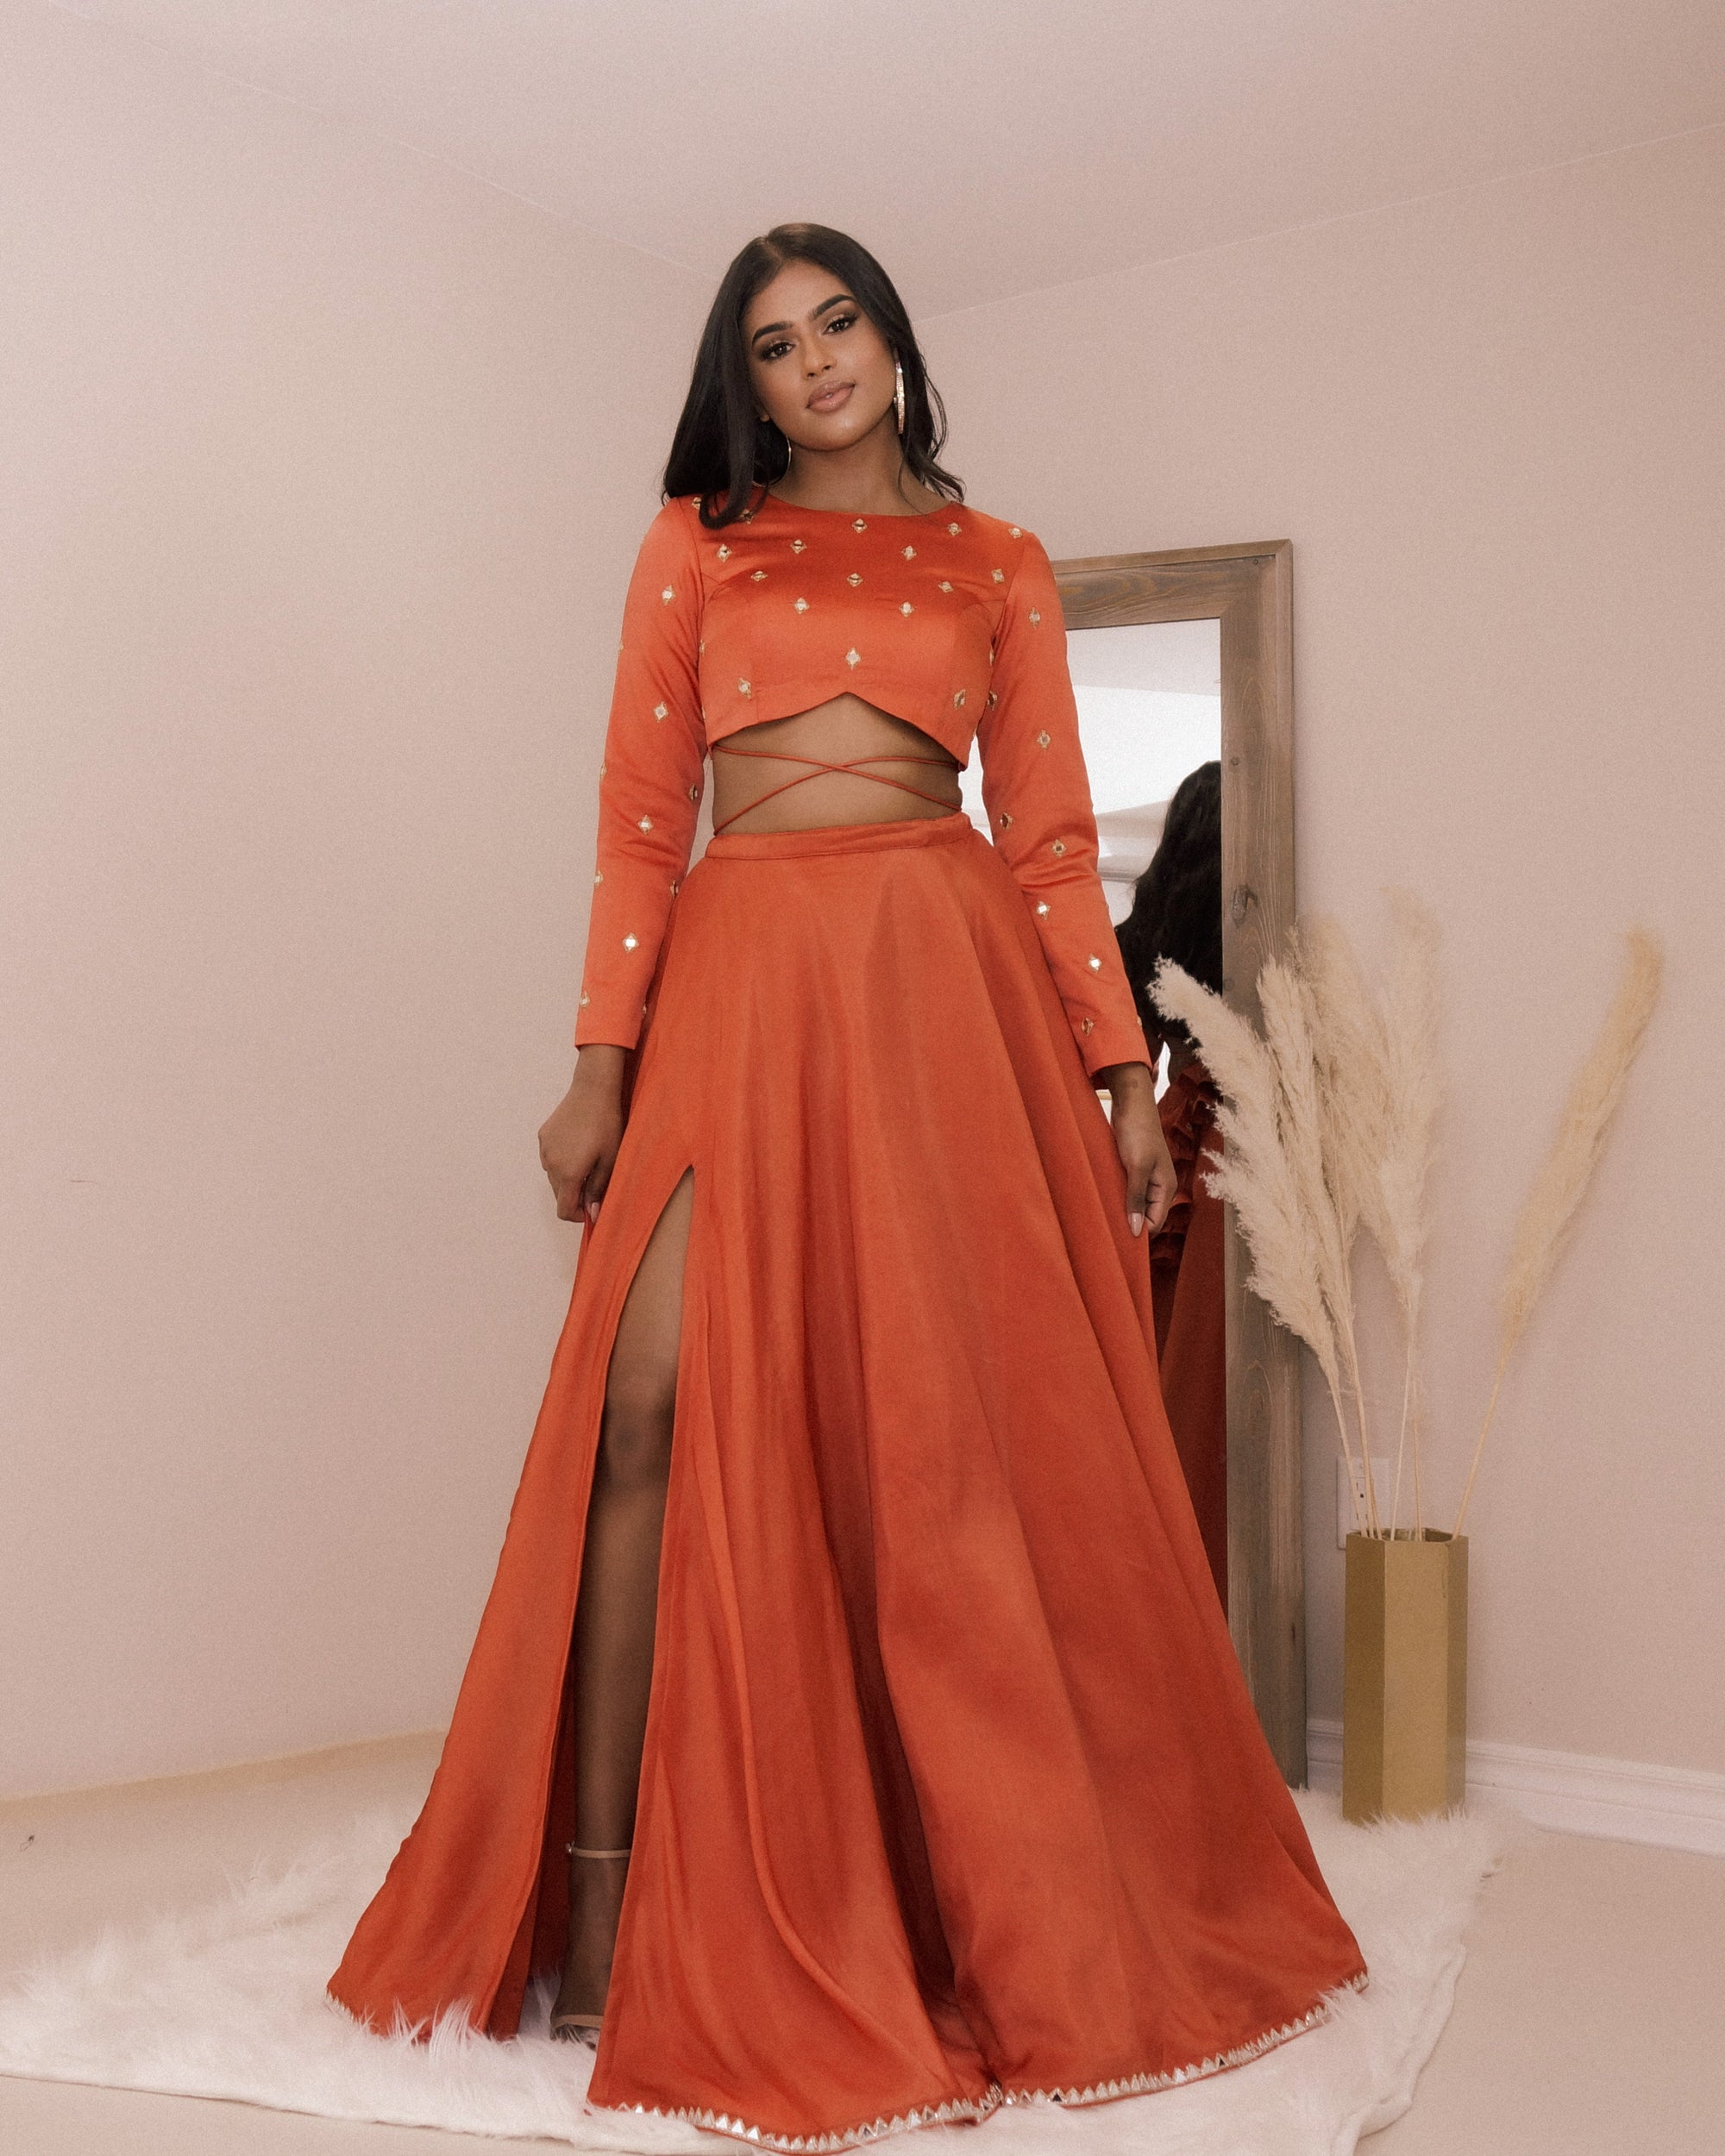 Burnt orange colour real mirror work lehenga skirt choli croptop modern indianwear